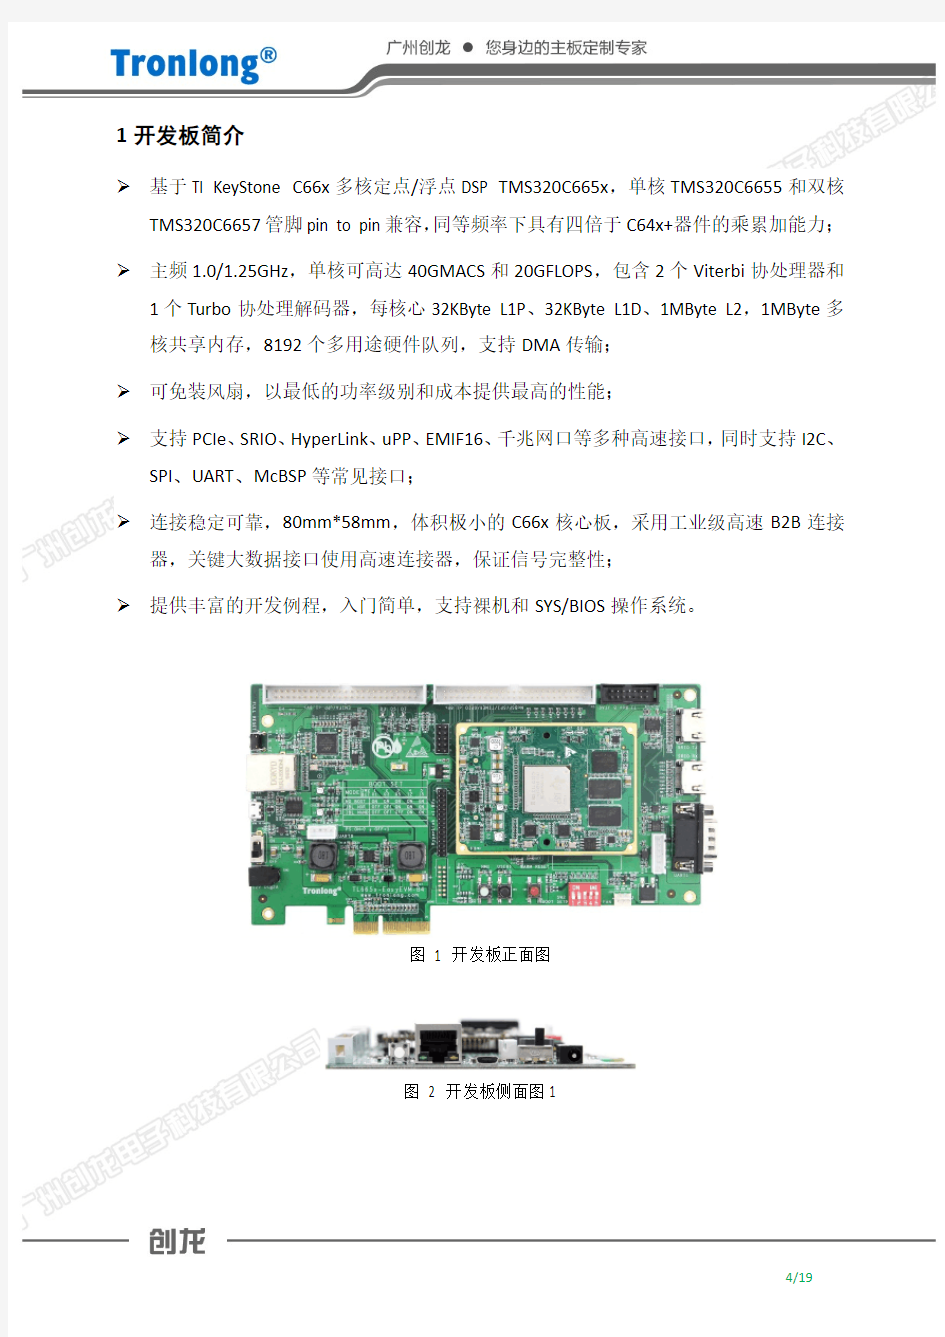 TI DSP TMS320C665x 开发板简介